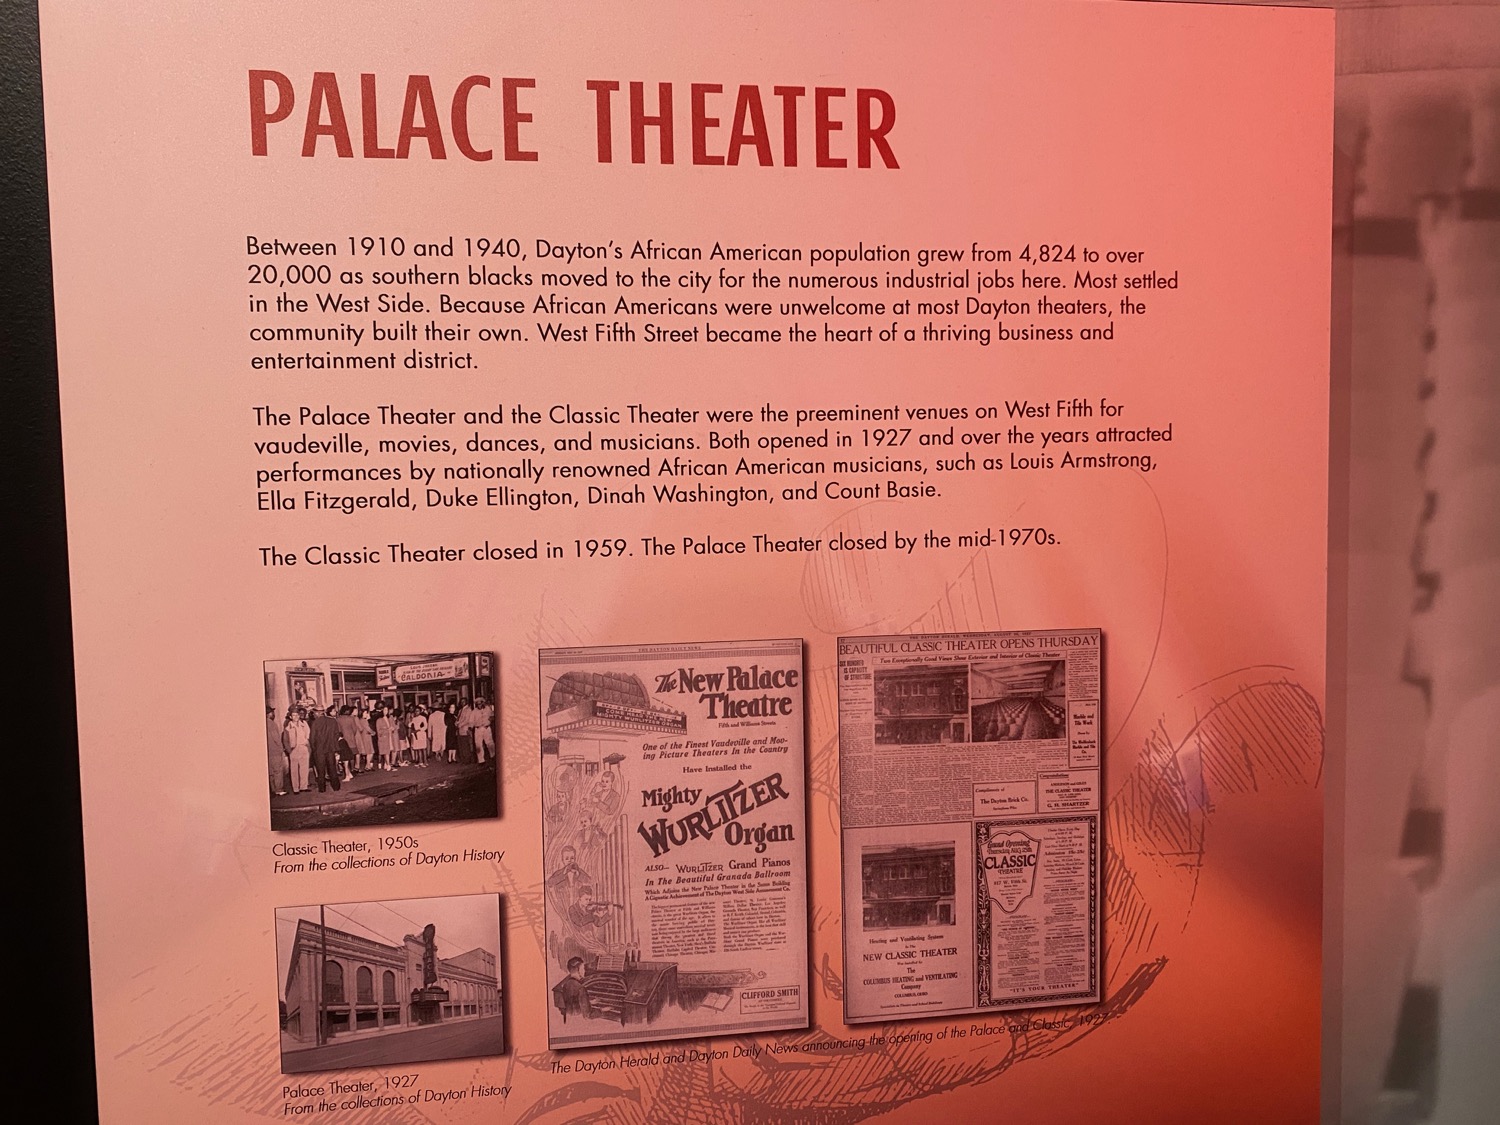 History of Dayton's Palace Theater